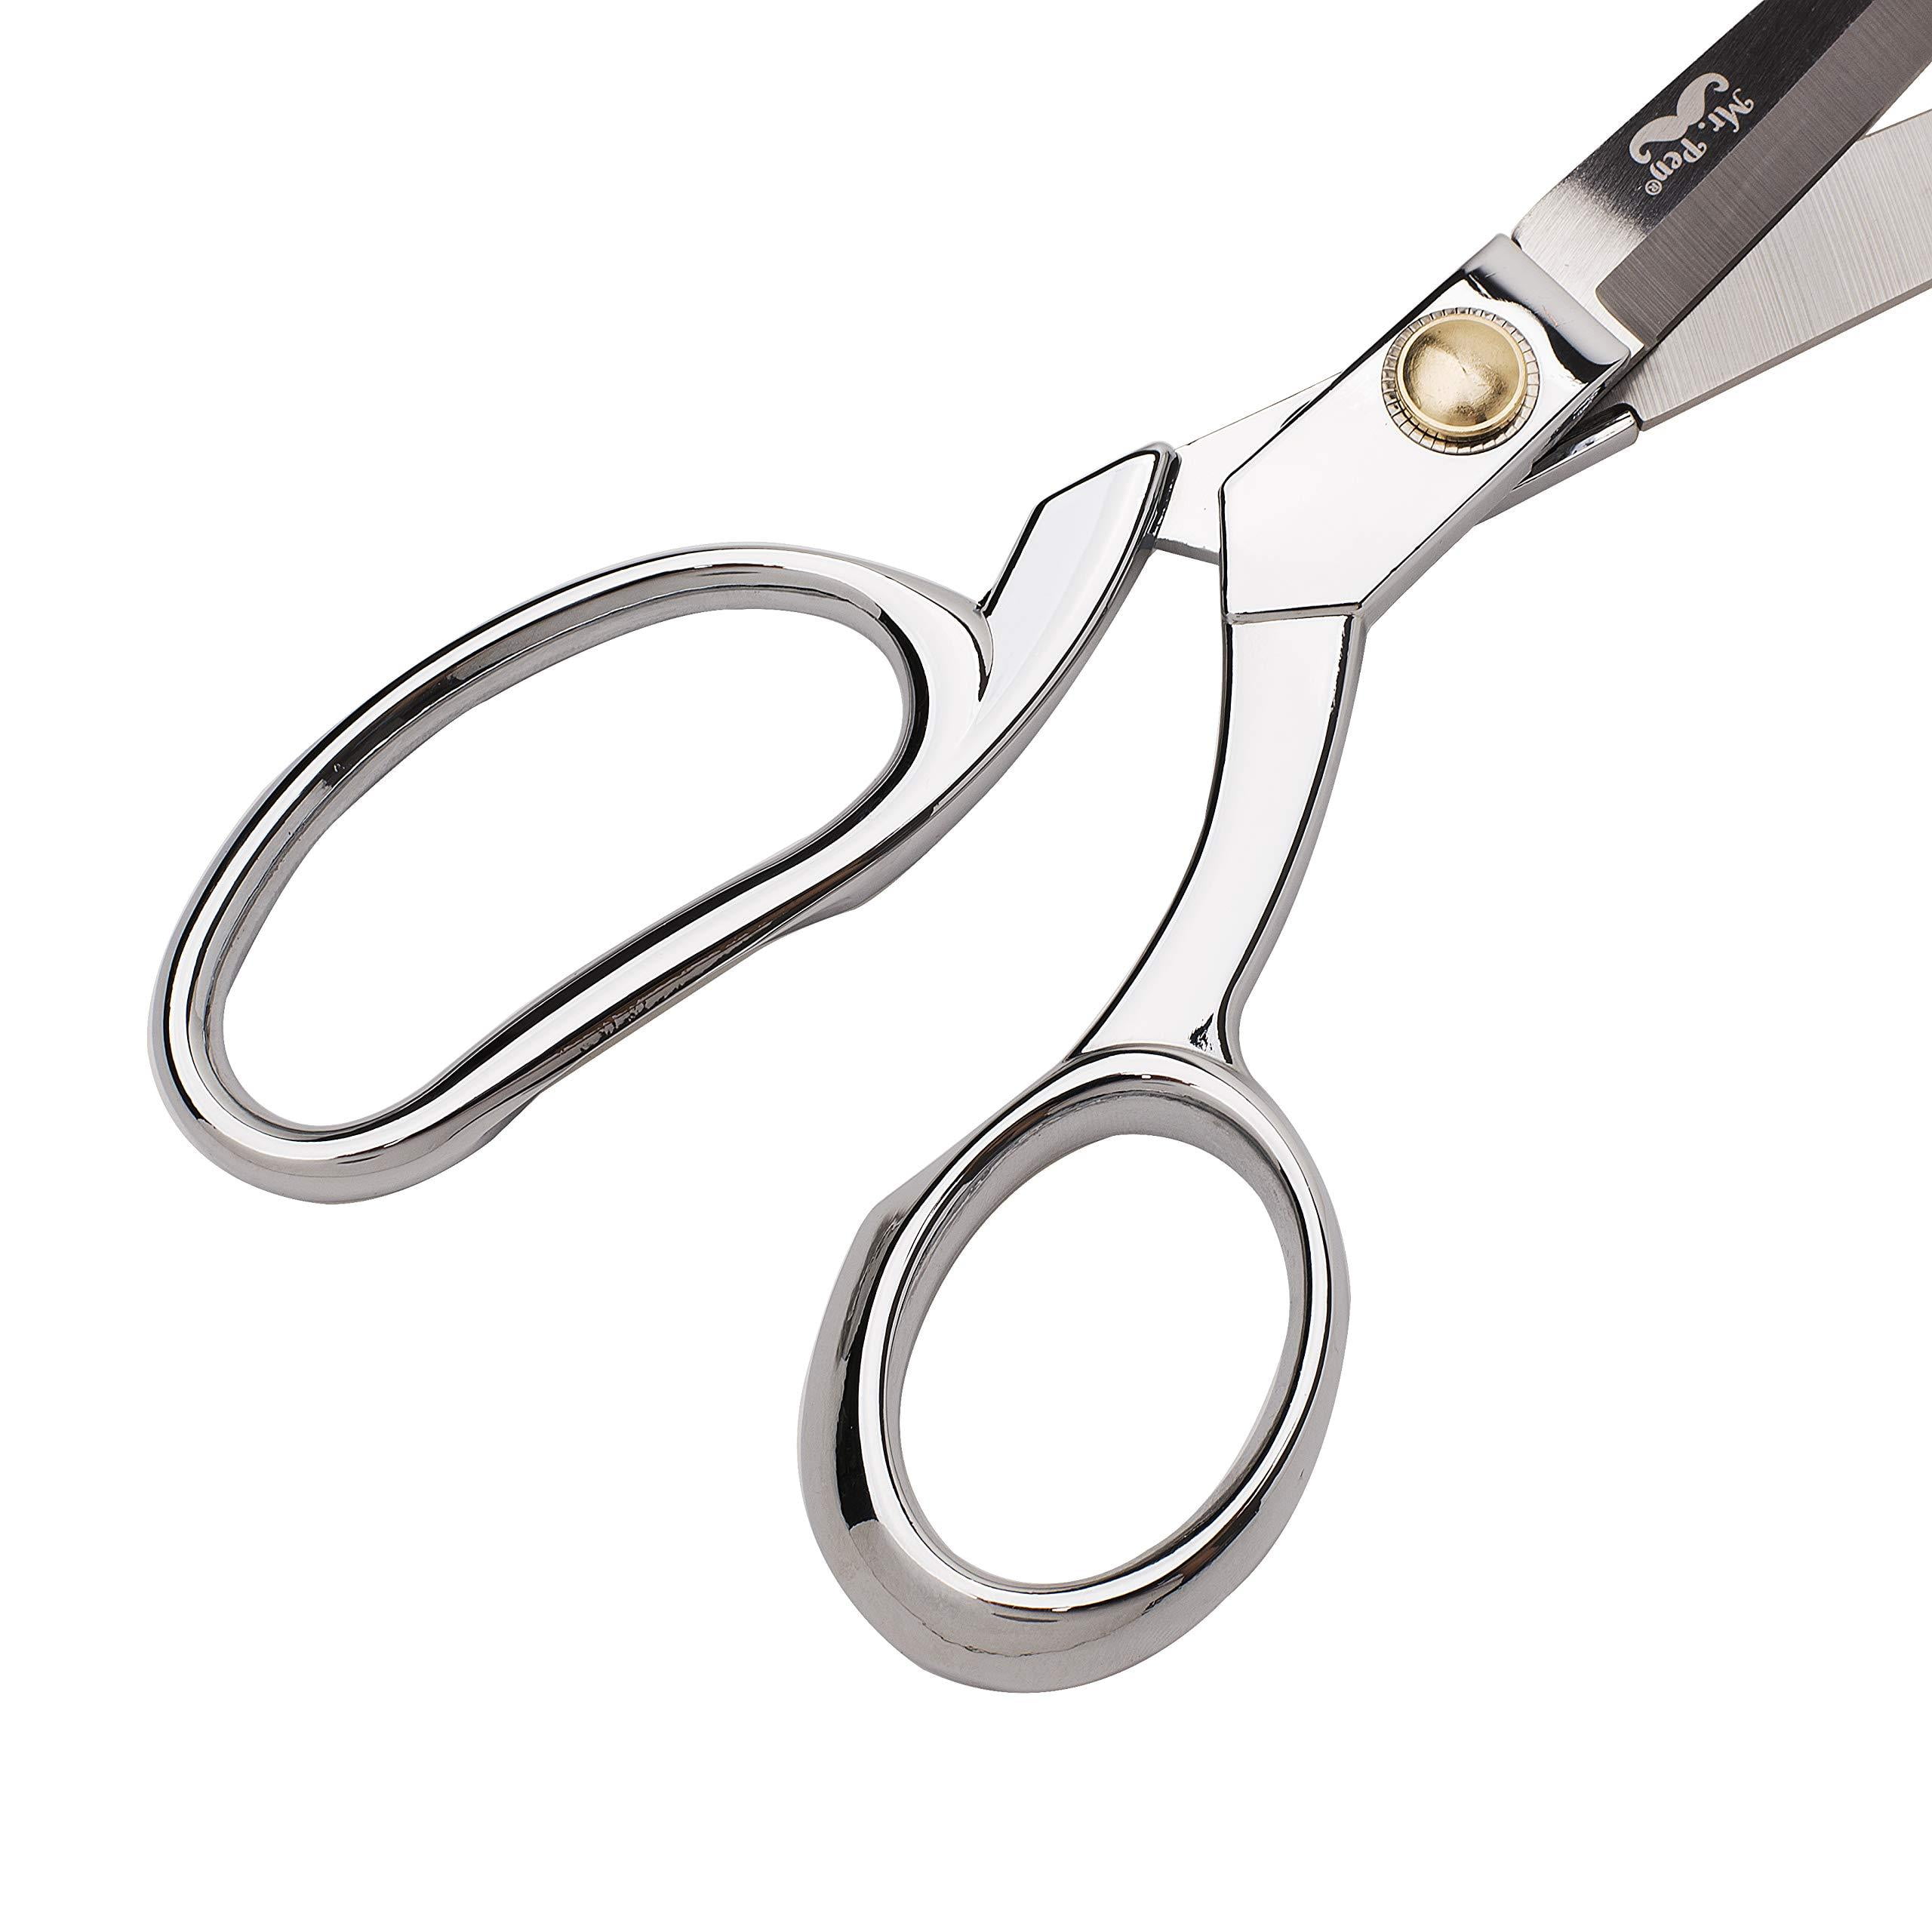 CEO Cutting Scissors Fabric Scissors 10 Inch, 2) Pen/Scissors/Space/Coim  Pin/Adhesive Wick